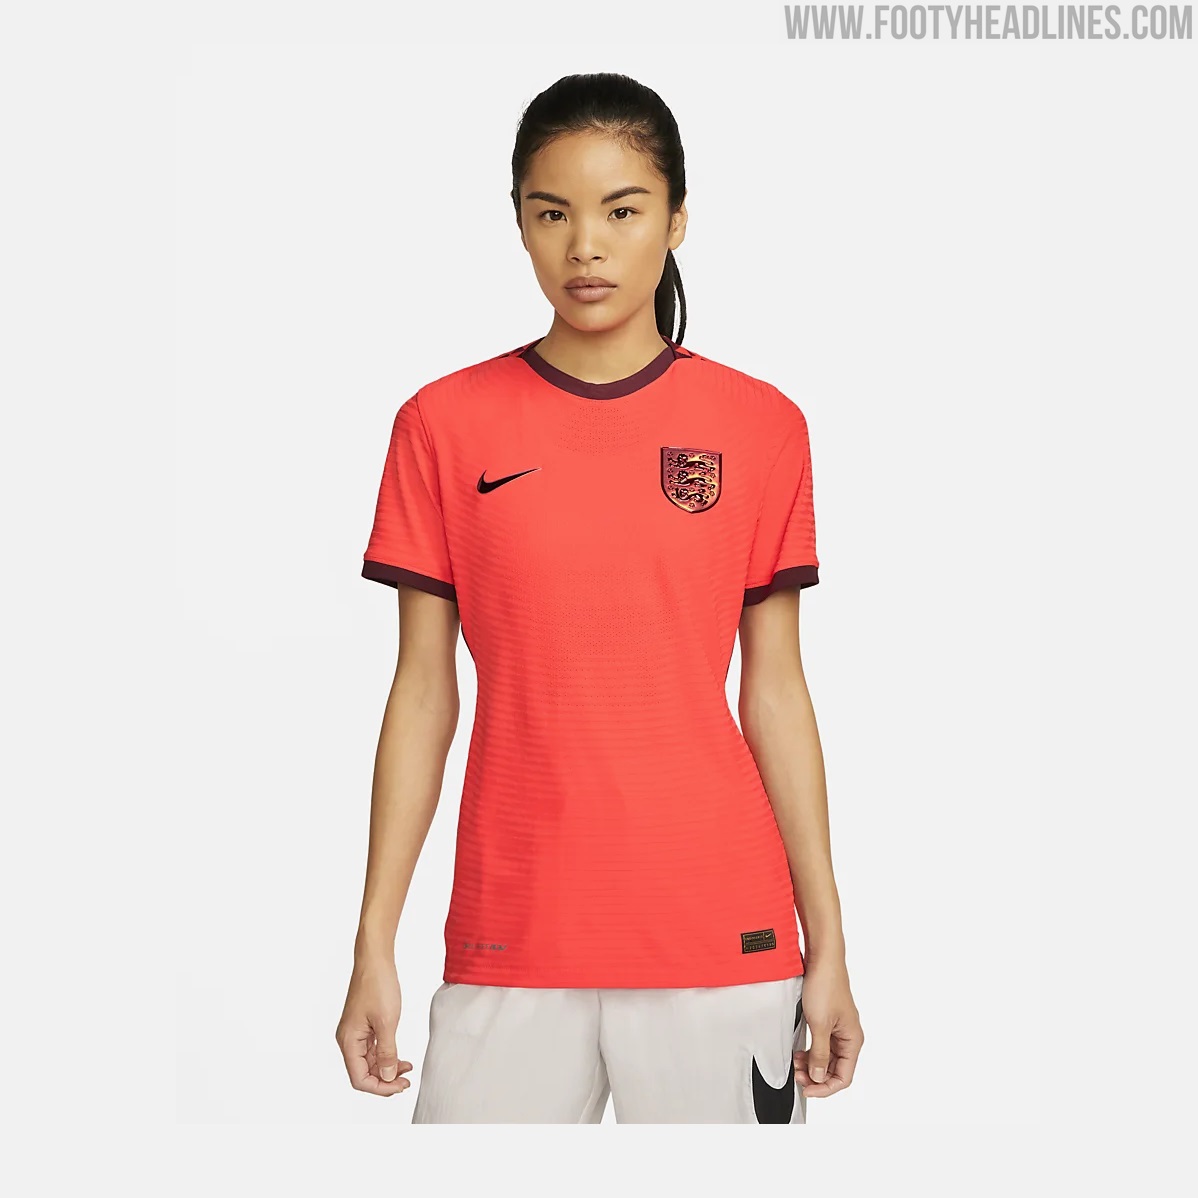 Nike Women's Euro 2022 Kits Released - England, France & Netherlands ...